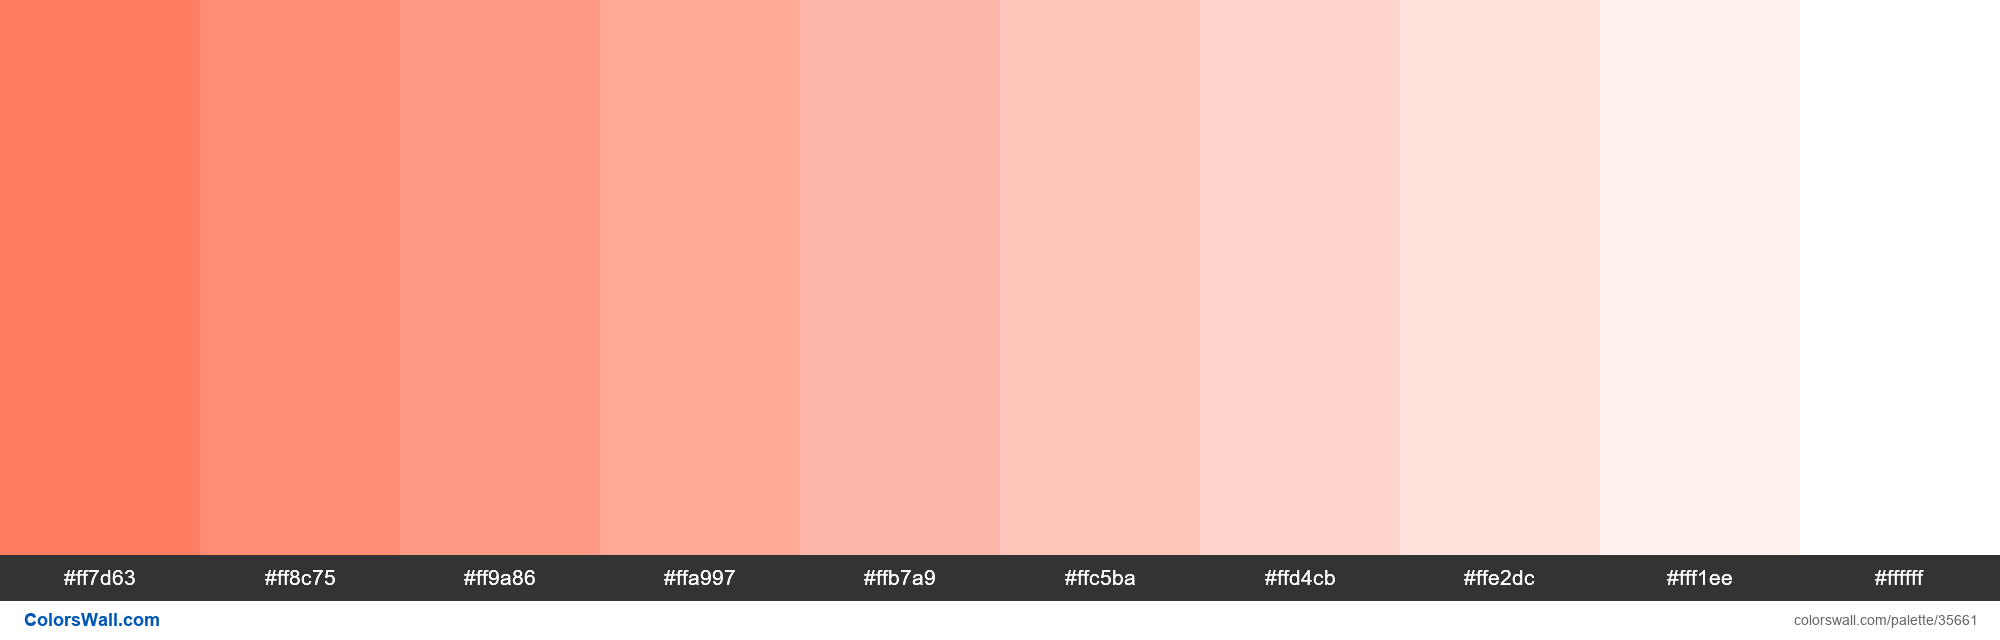 Tints XKCD Color orange pink #ff6f52 hex palette ColorsWall